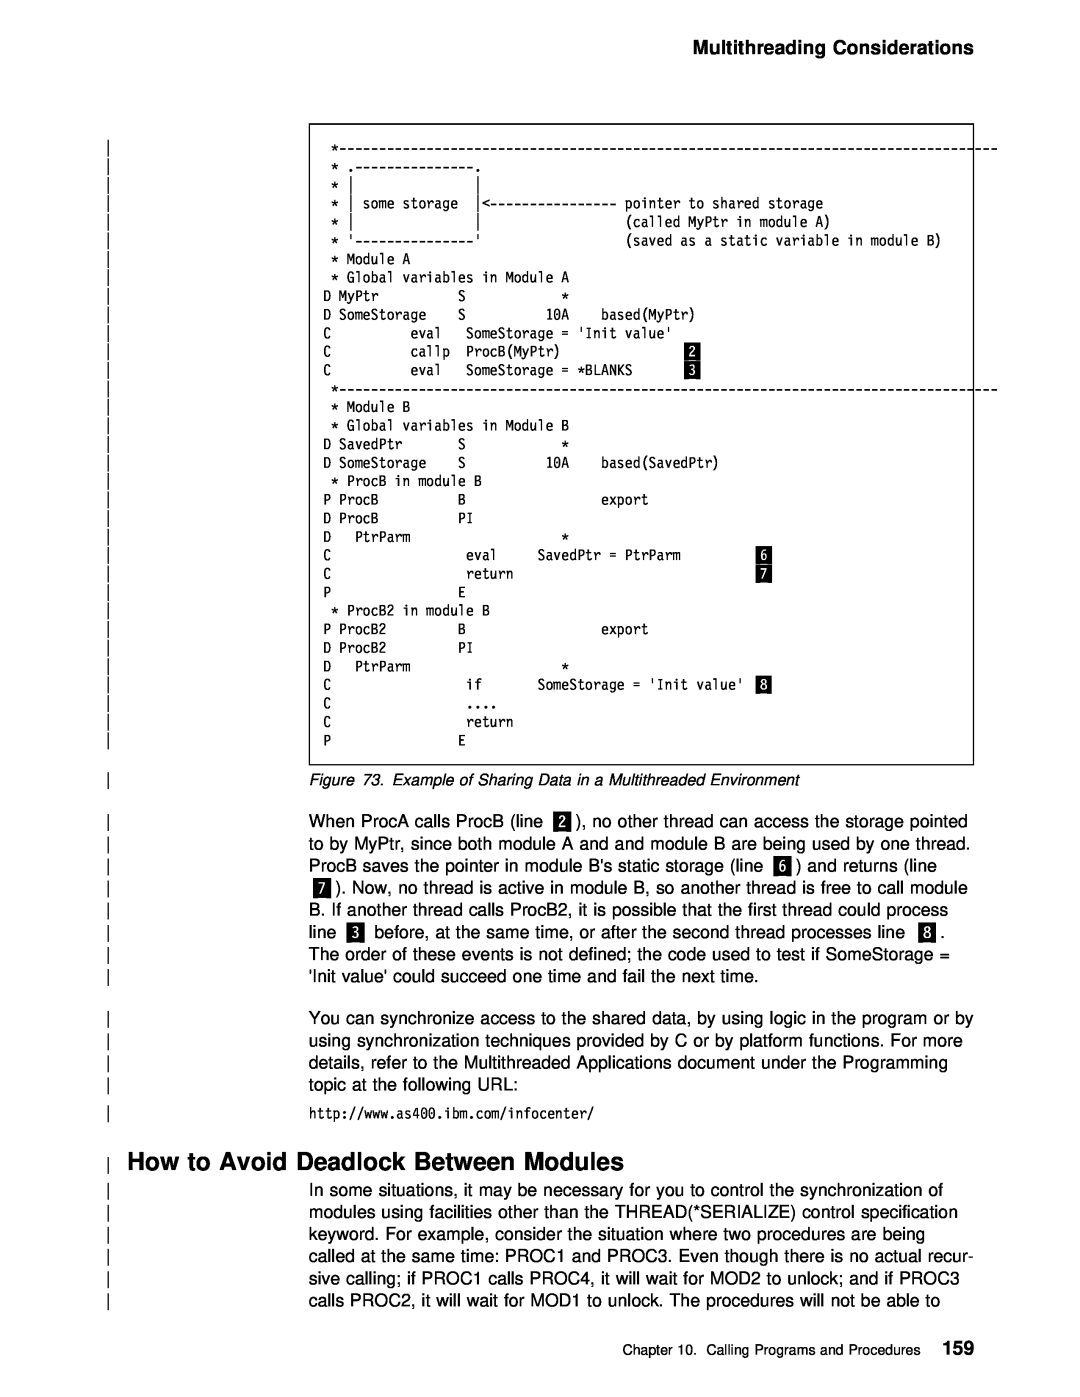 IBM AS/400 manual to Avoid Deadlock, Multithreading Considerations, Modules 